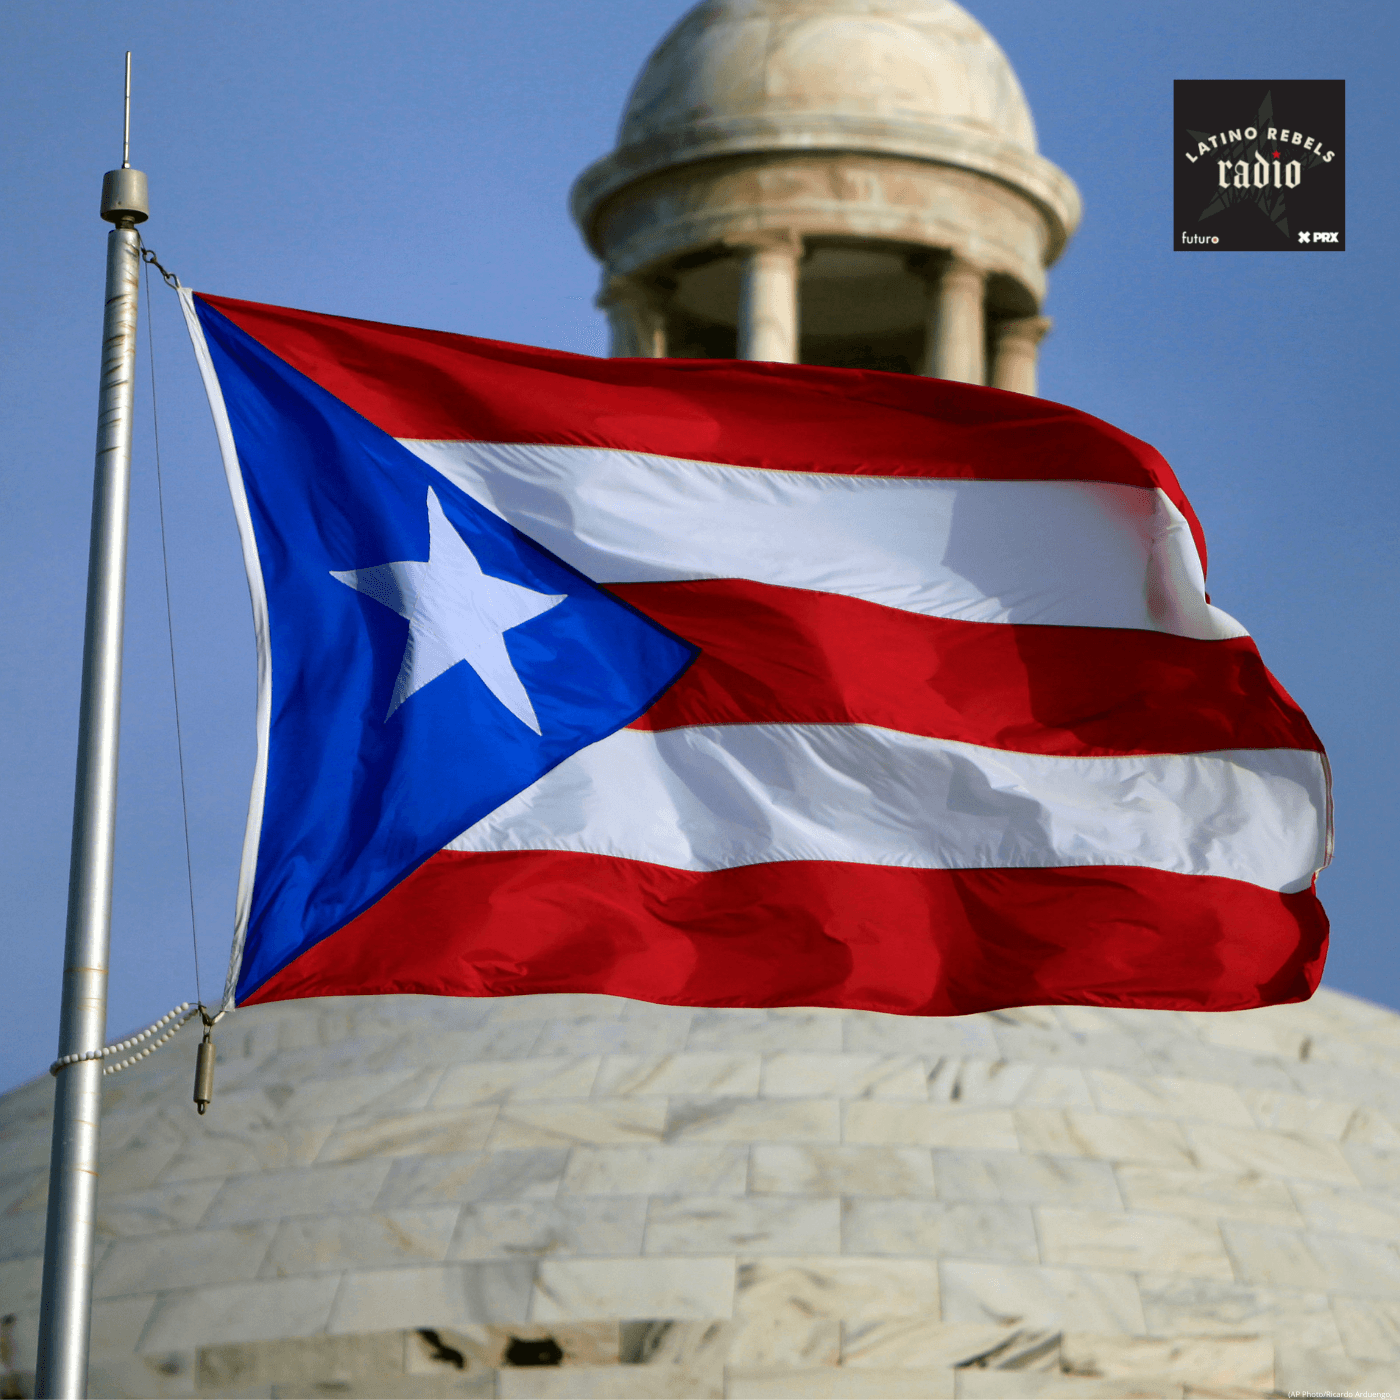 Thumbnail for "A Progressive Case for Puerto Rico Statehood".